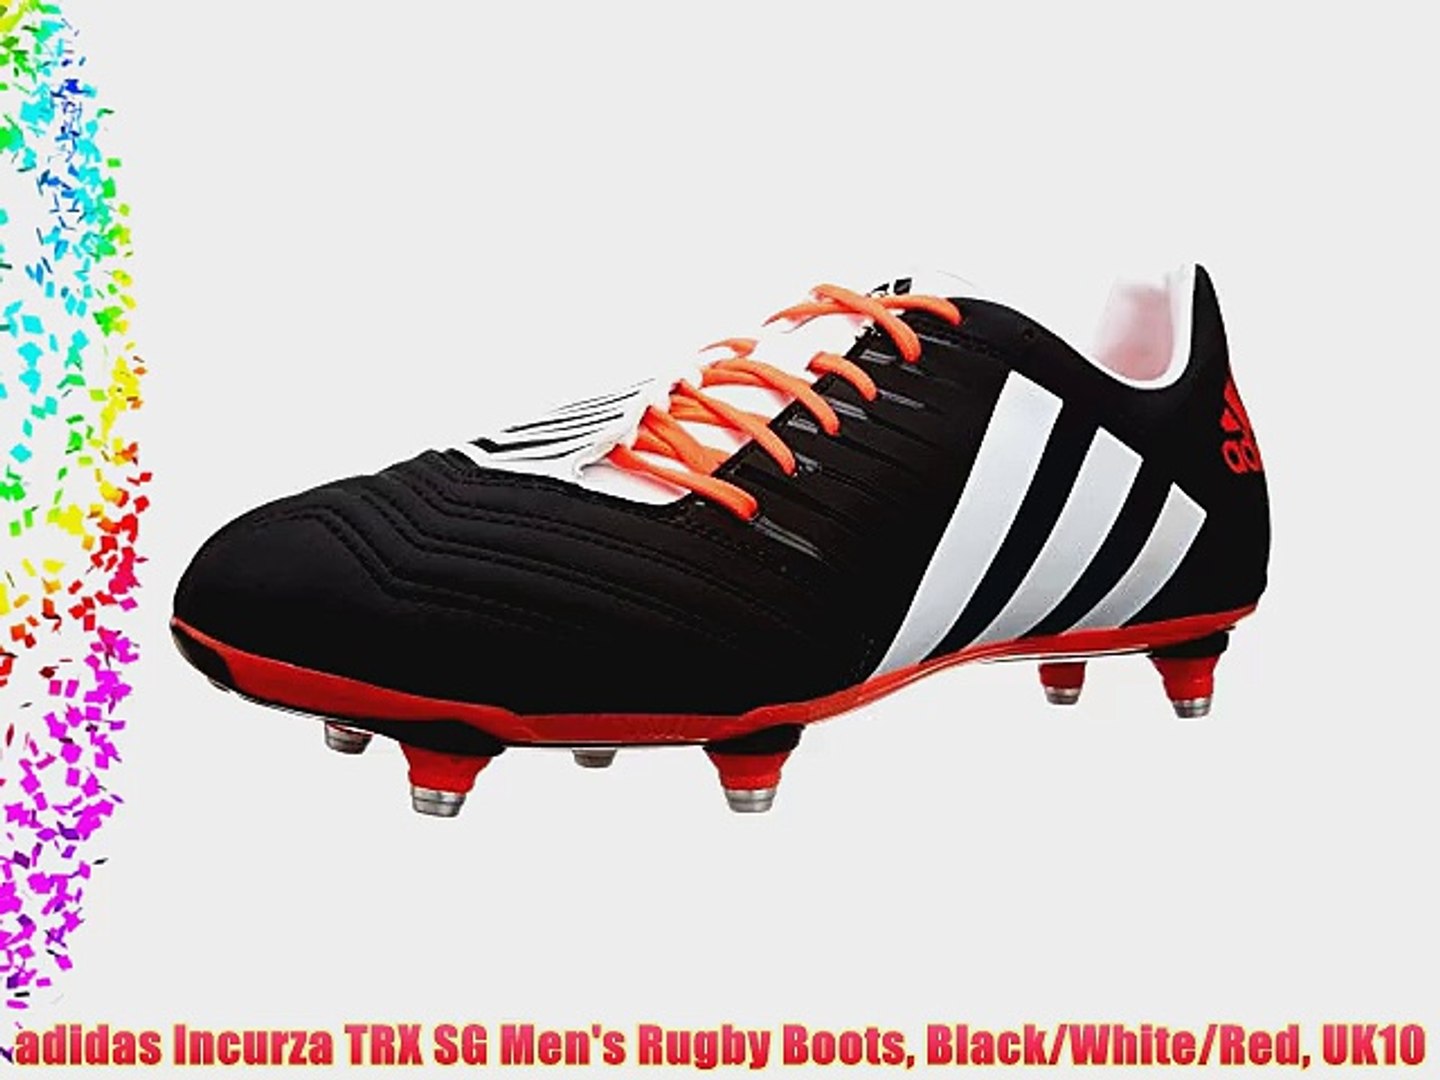 romancı küçük sınıflandırma adidas incurza trx sg rugby boots -  offshore-industry.net